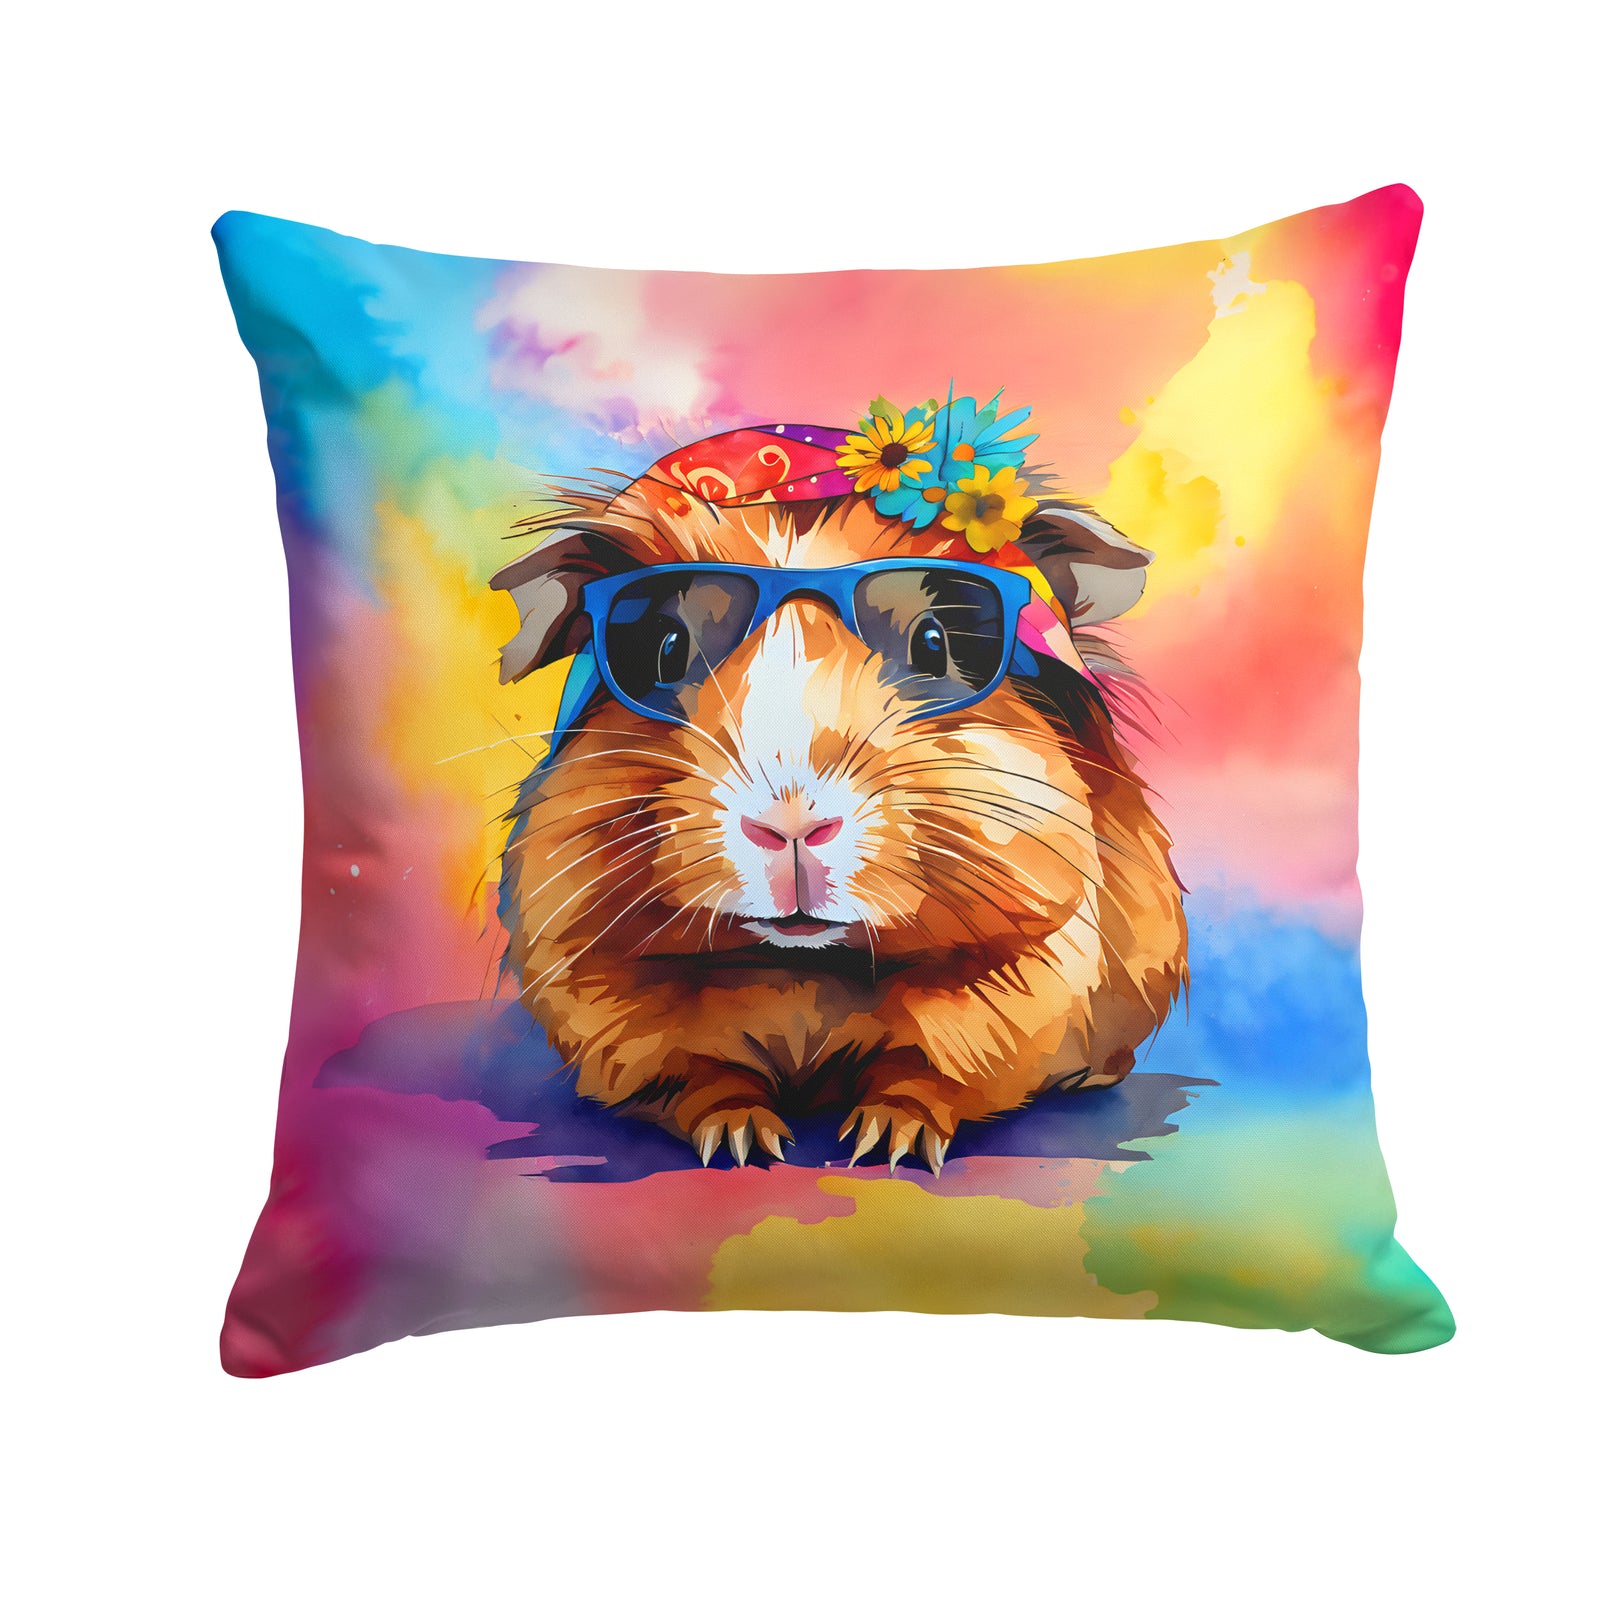 Buy this Hippie Animal Guinea Pig Throw Pillow